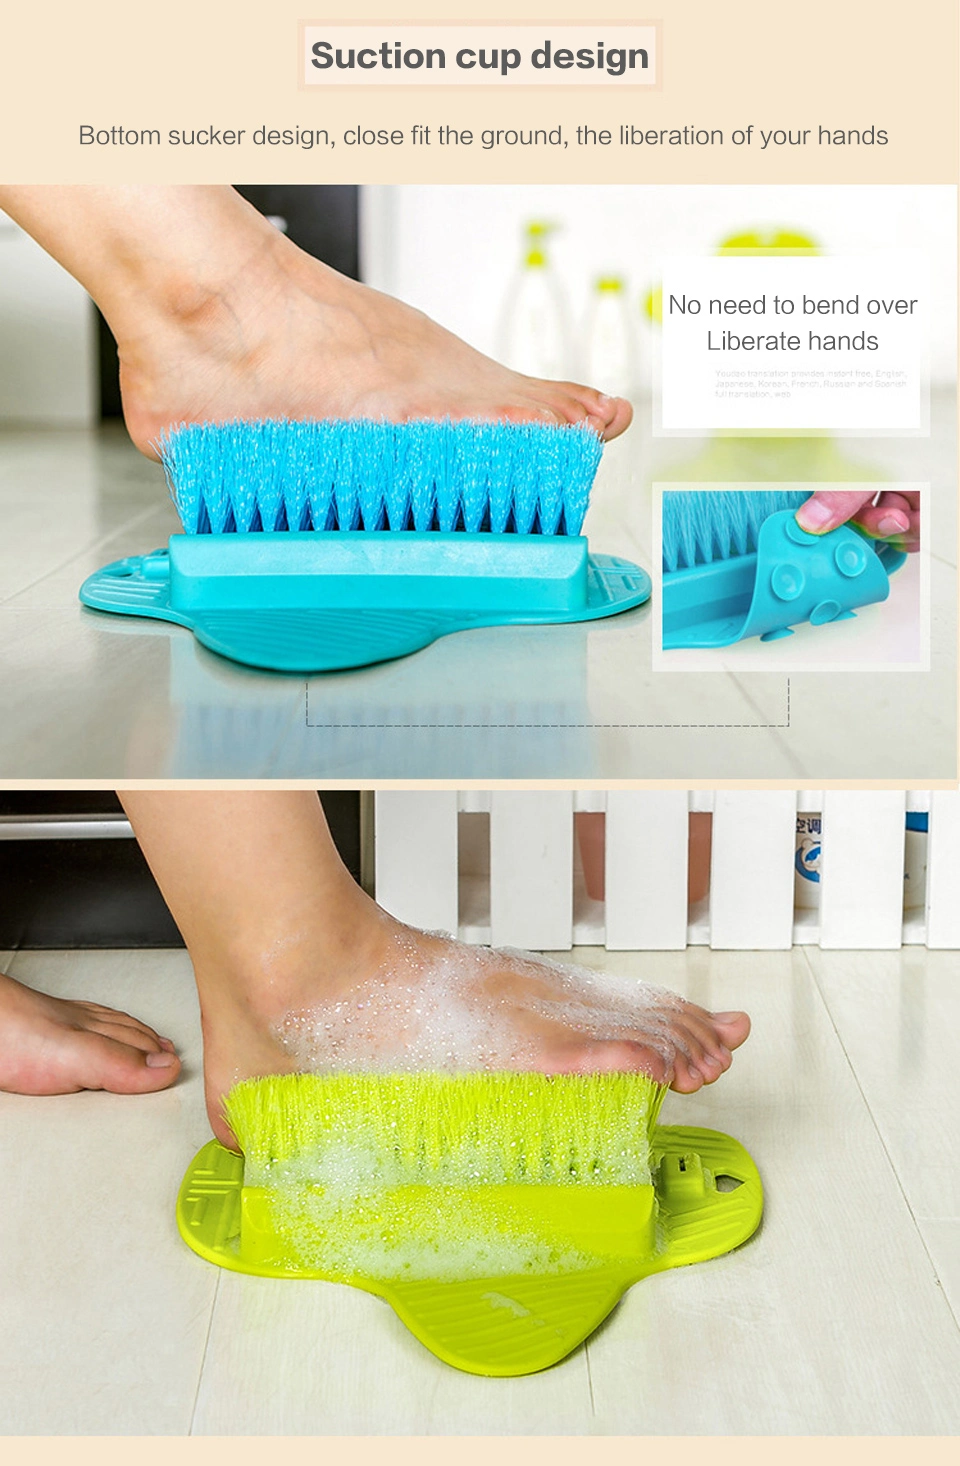 Factory Wholesale Plastic Bath Shower Foot Brush Scrubber Bath Shoe Brush Feet Massage Slippers Brush